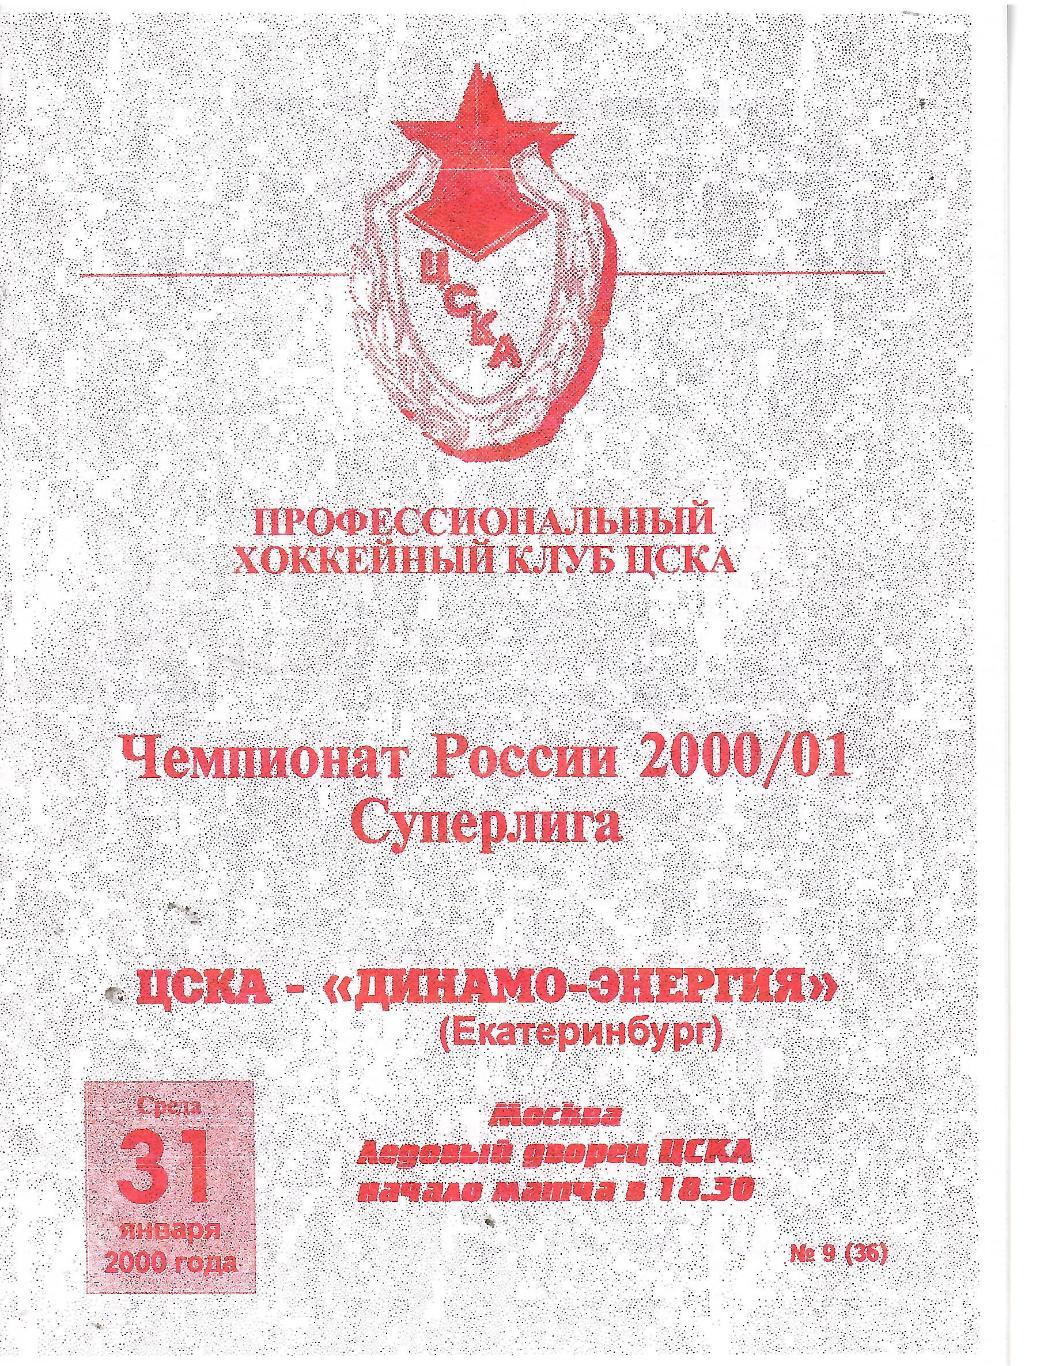 2000 ЦСКА - Динамо Екатеринбург (31.01)